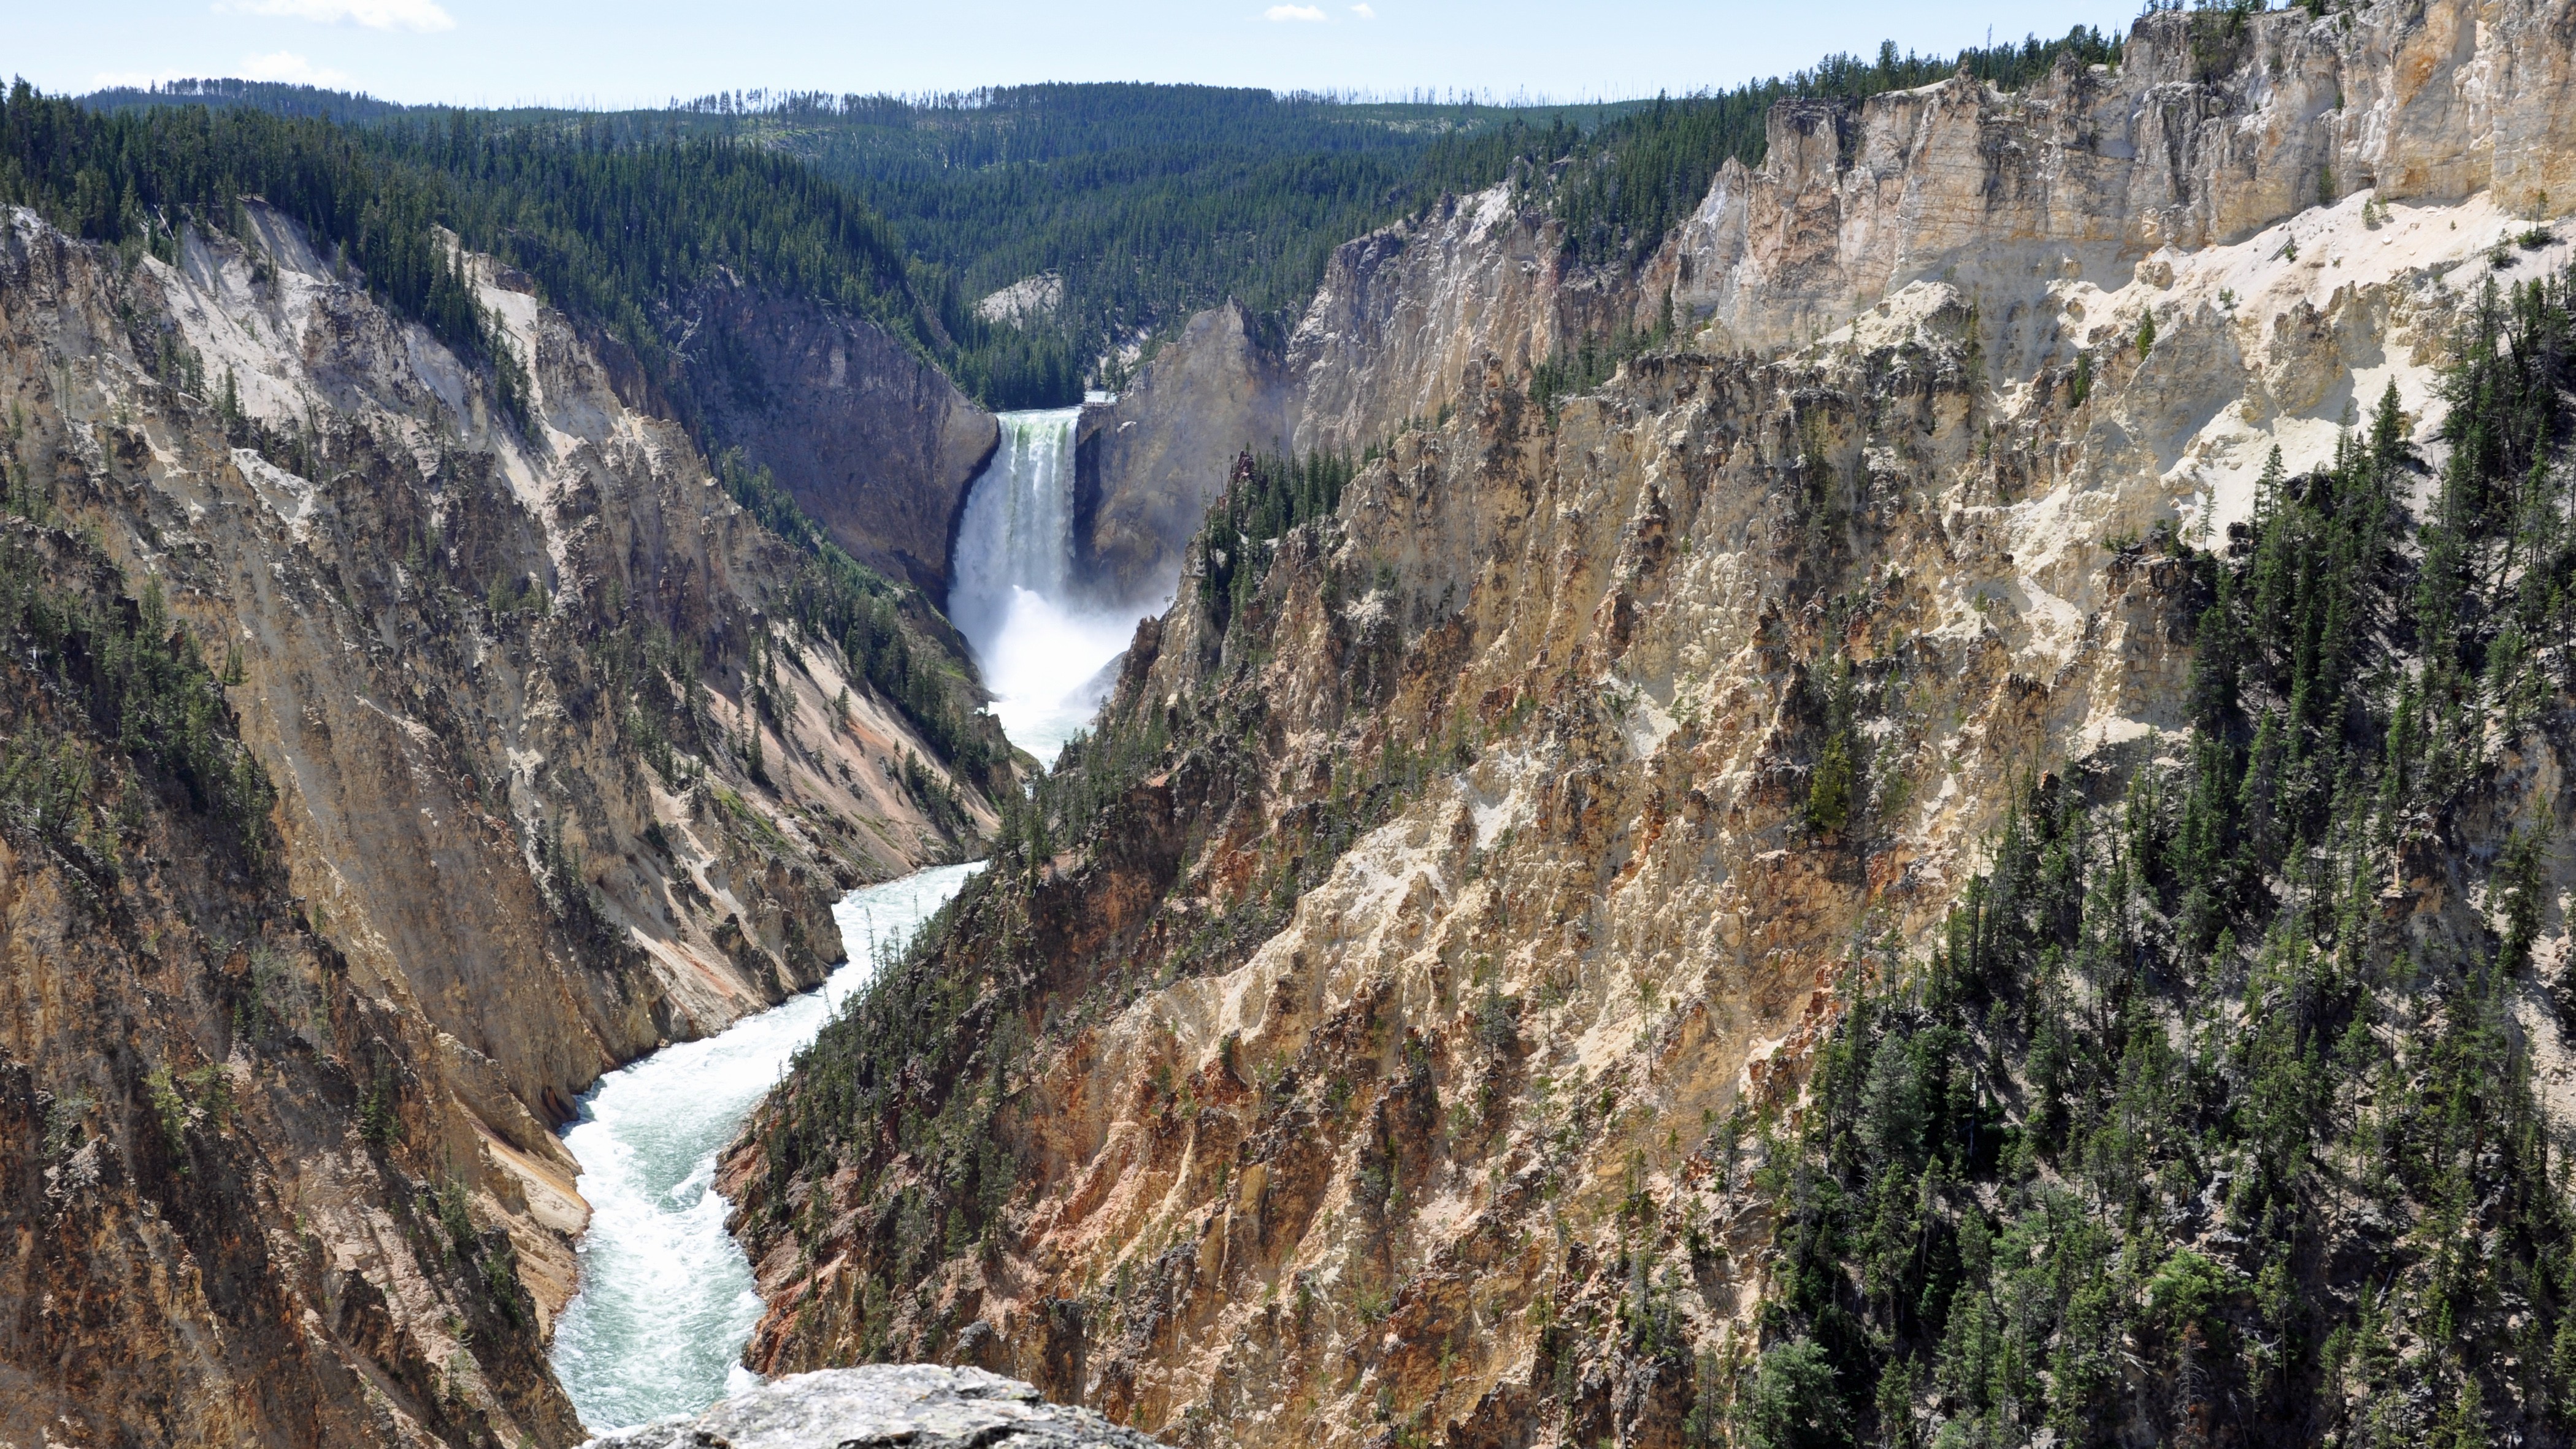 General 4200x2363 Yellowstone National Park waterfall rocks rock formation USA nature canyon river